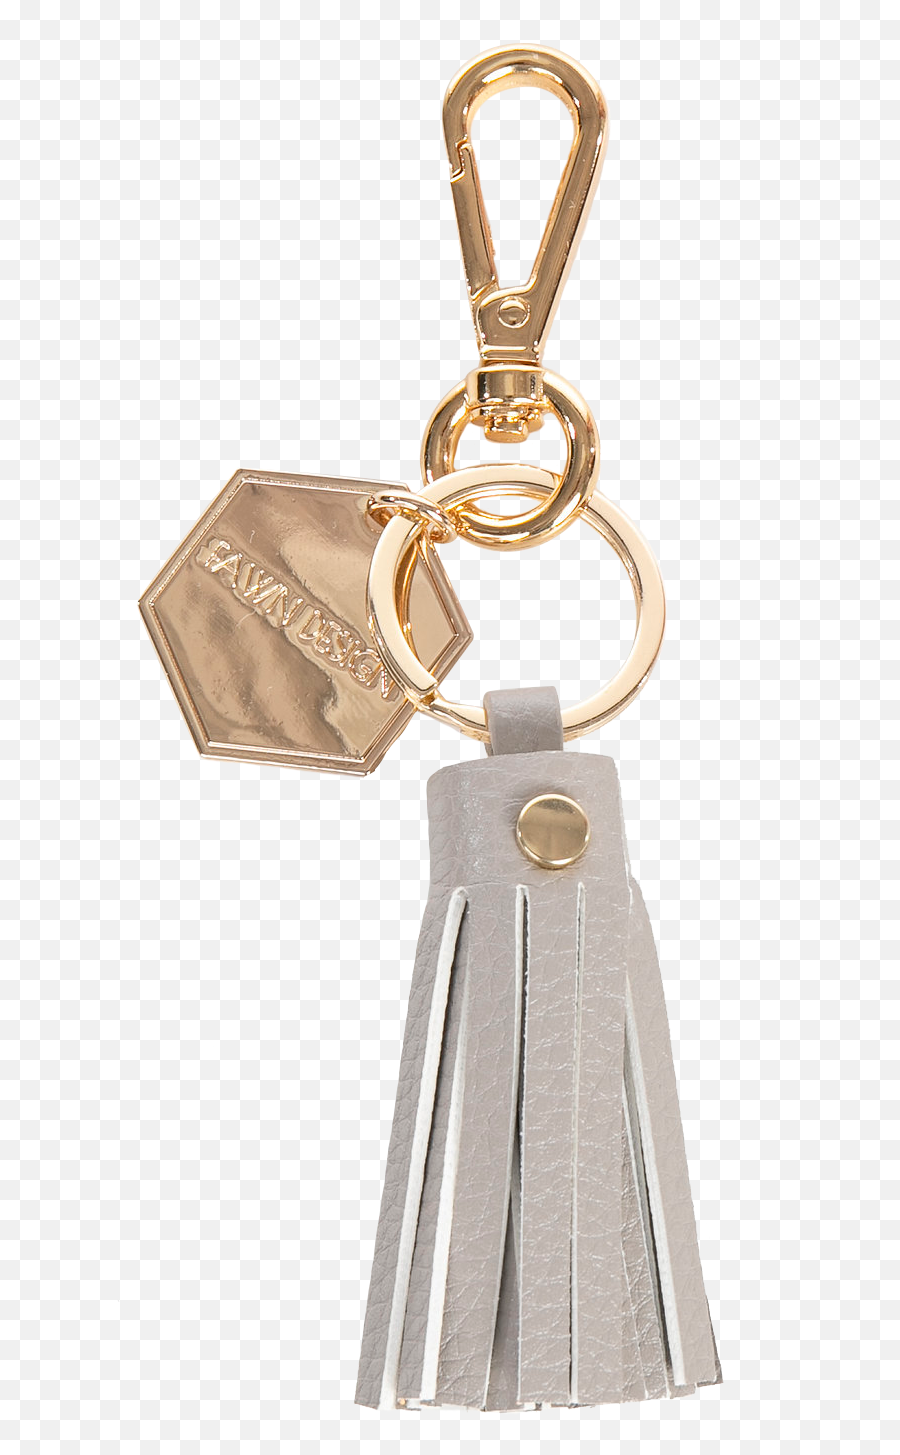 Download Fawn Design Tassel Keychains - Tassel Keychain Transparent Background Png,Tassel Png